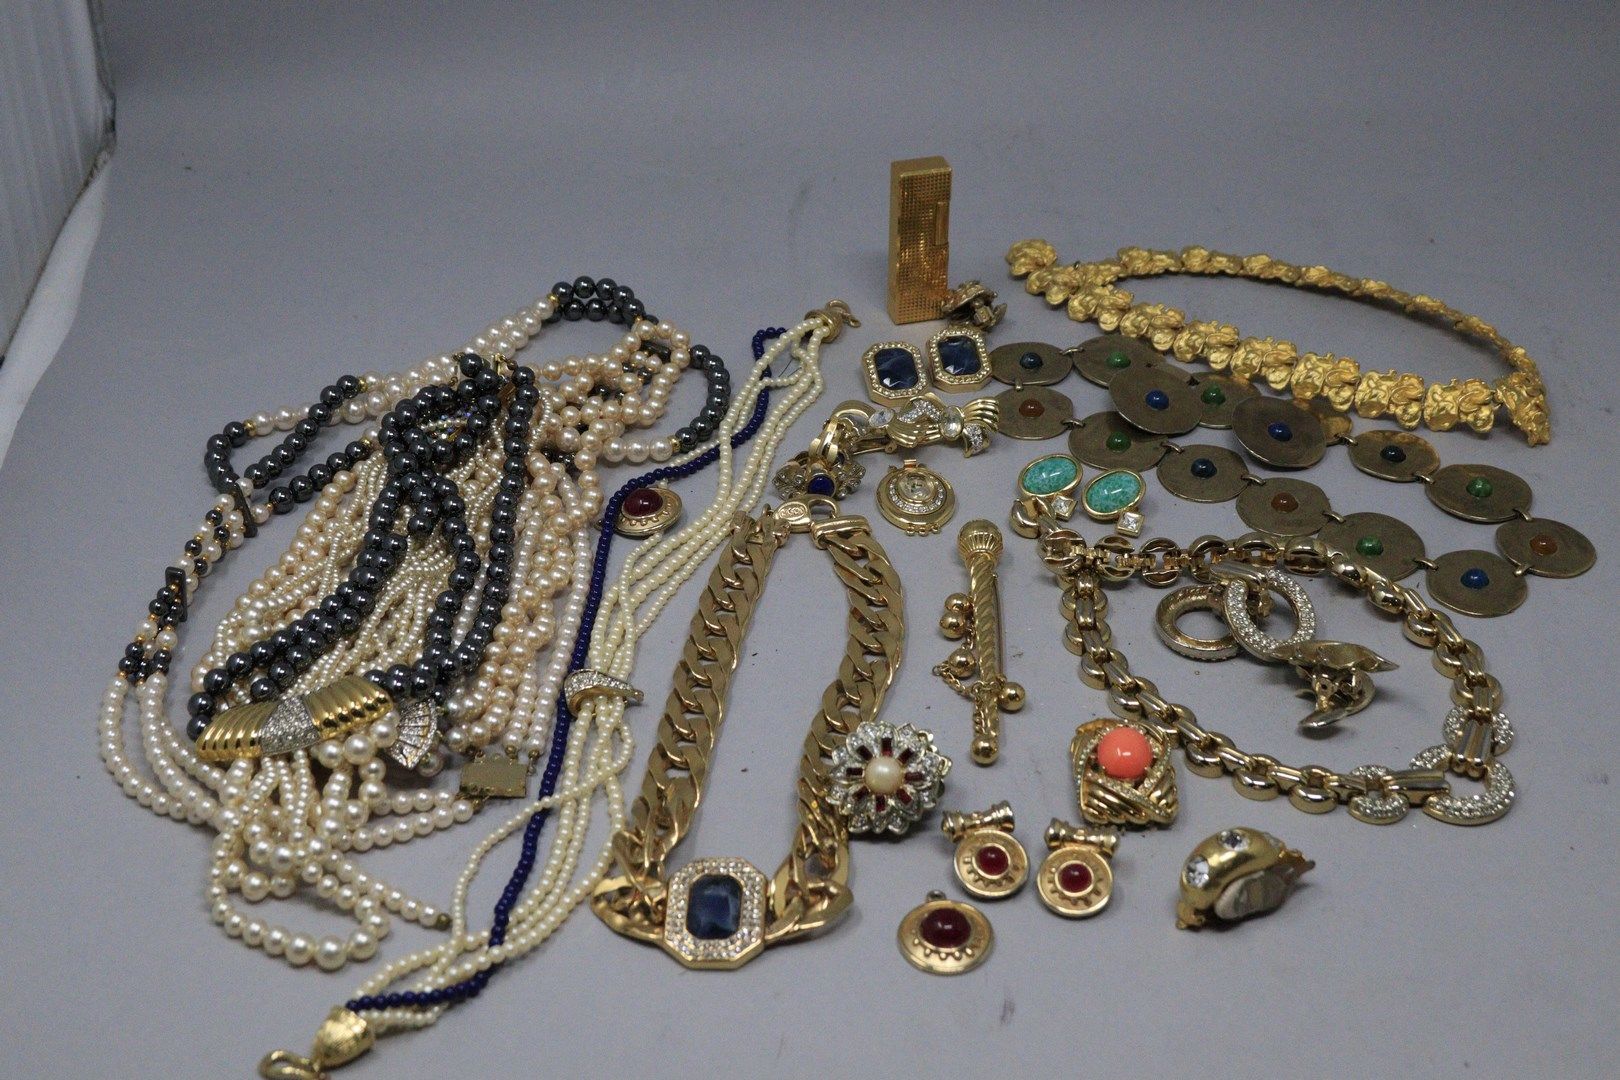 Null 大量的服装珠宝，包括: 
- 5条珍珠项链
- 4条金项链
- 11个耳夹
- 2个珠宝扣子
- 2个吊坠 
- 一个蜂鸟打火机
- 一个胸针